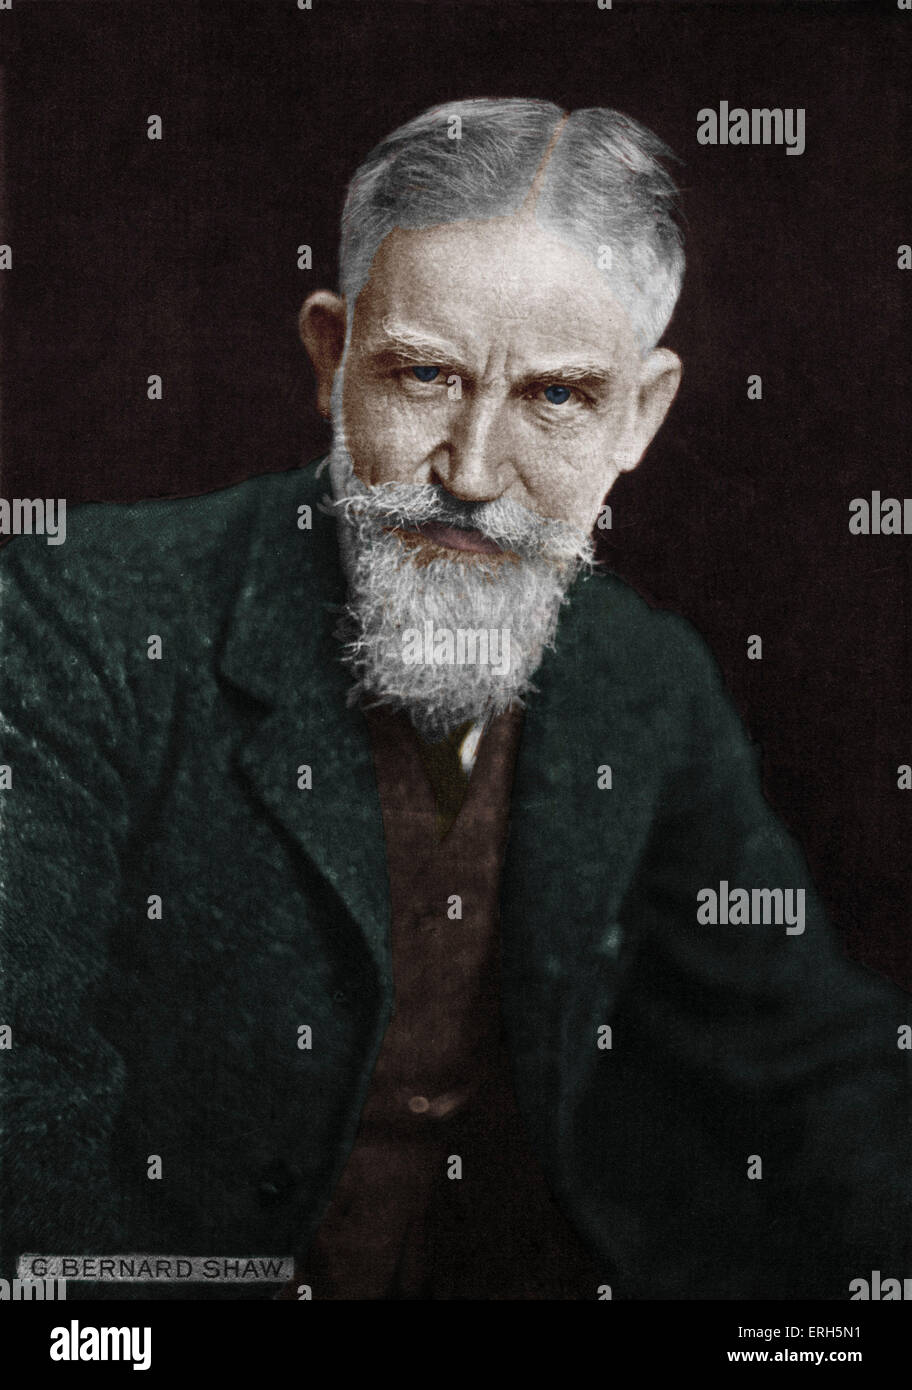 George Bernard Shaw - portrait. English writer (1856-1950) Stock Photo